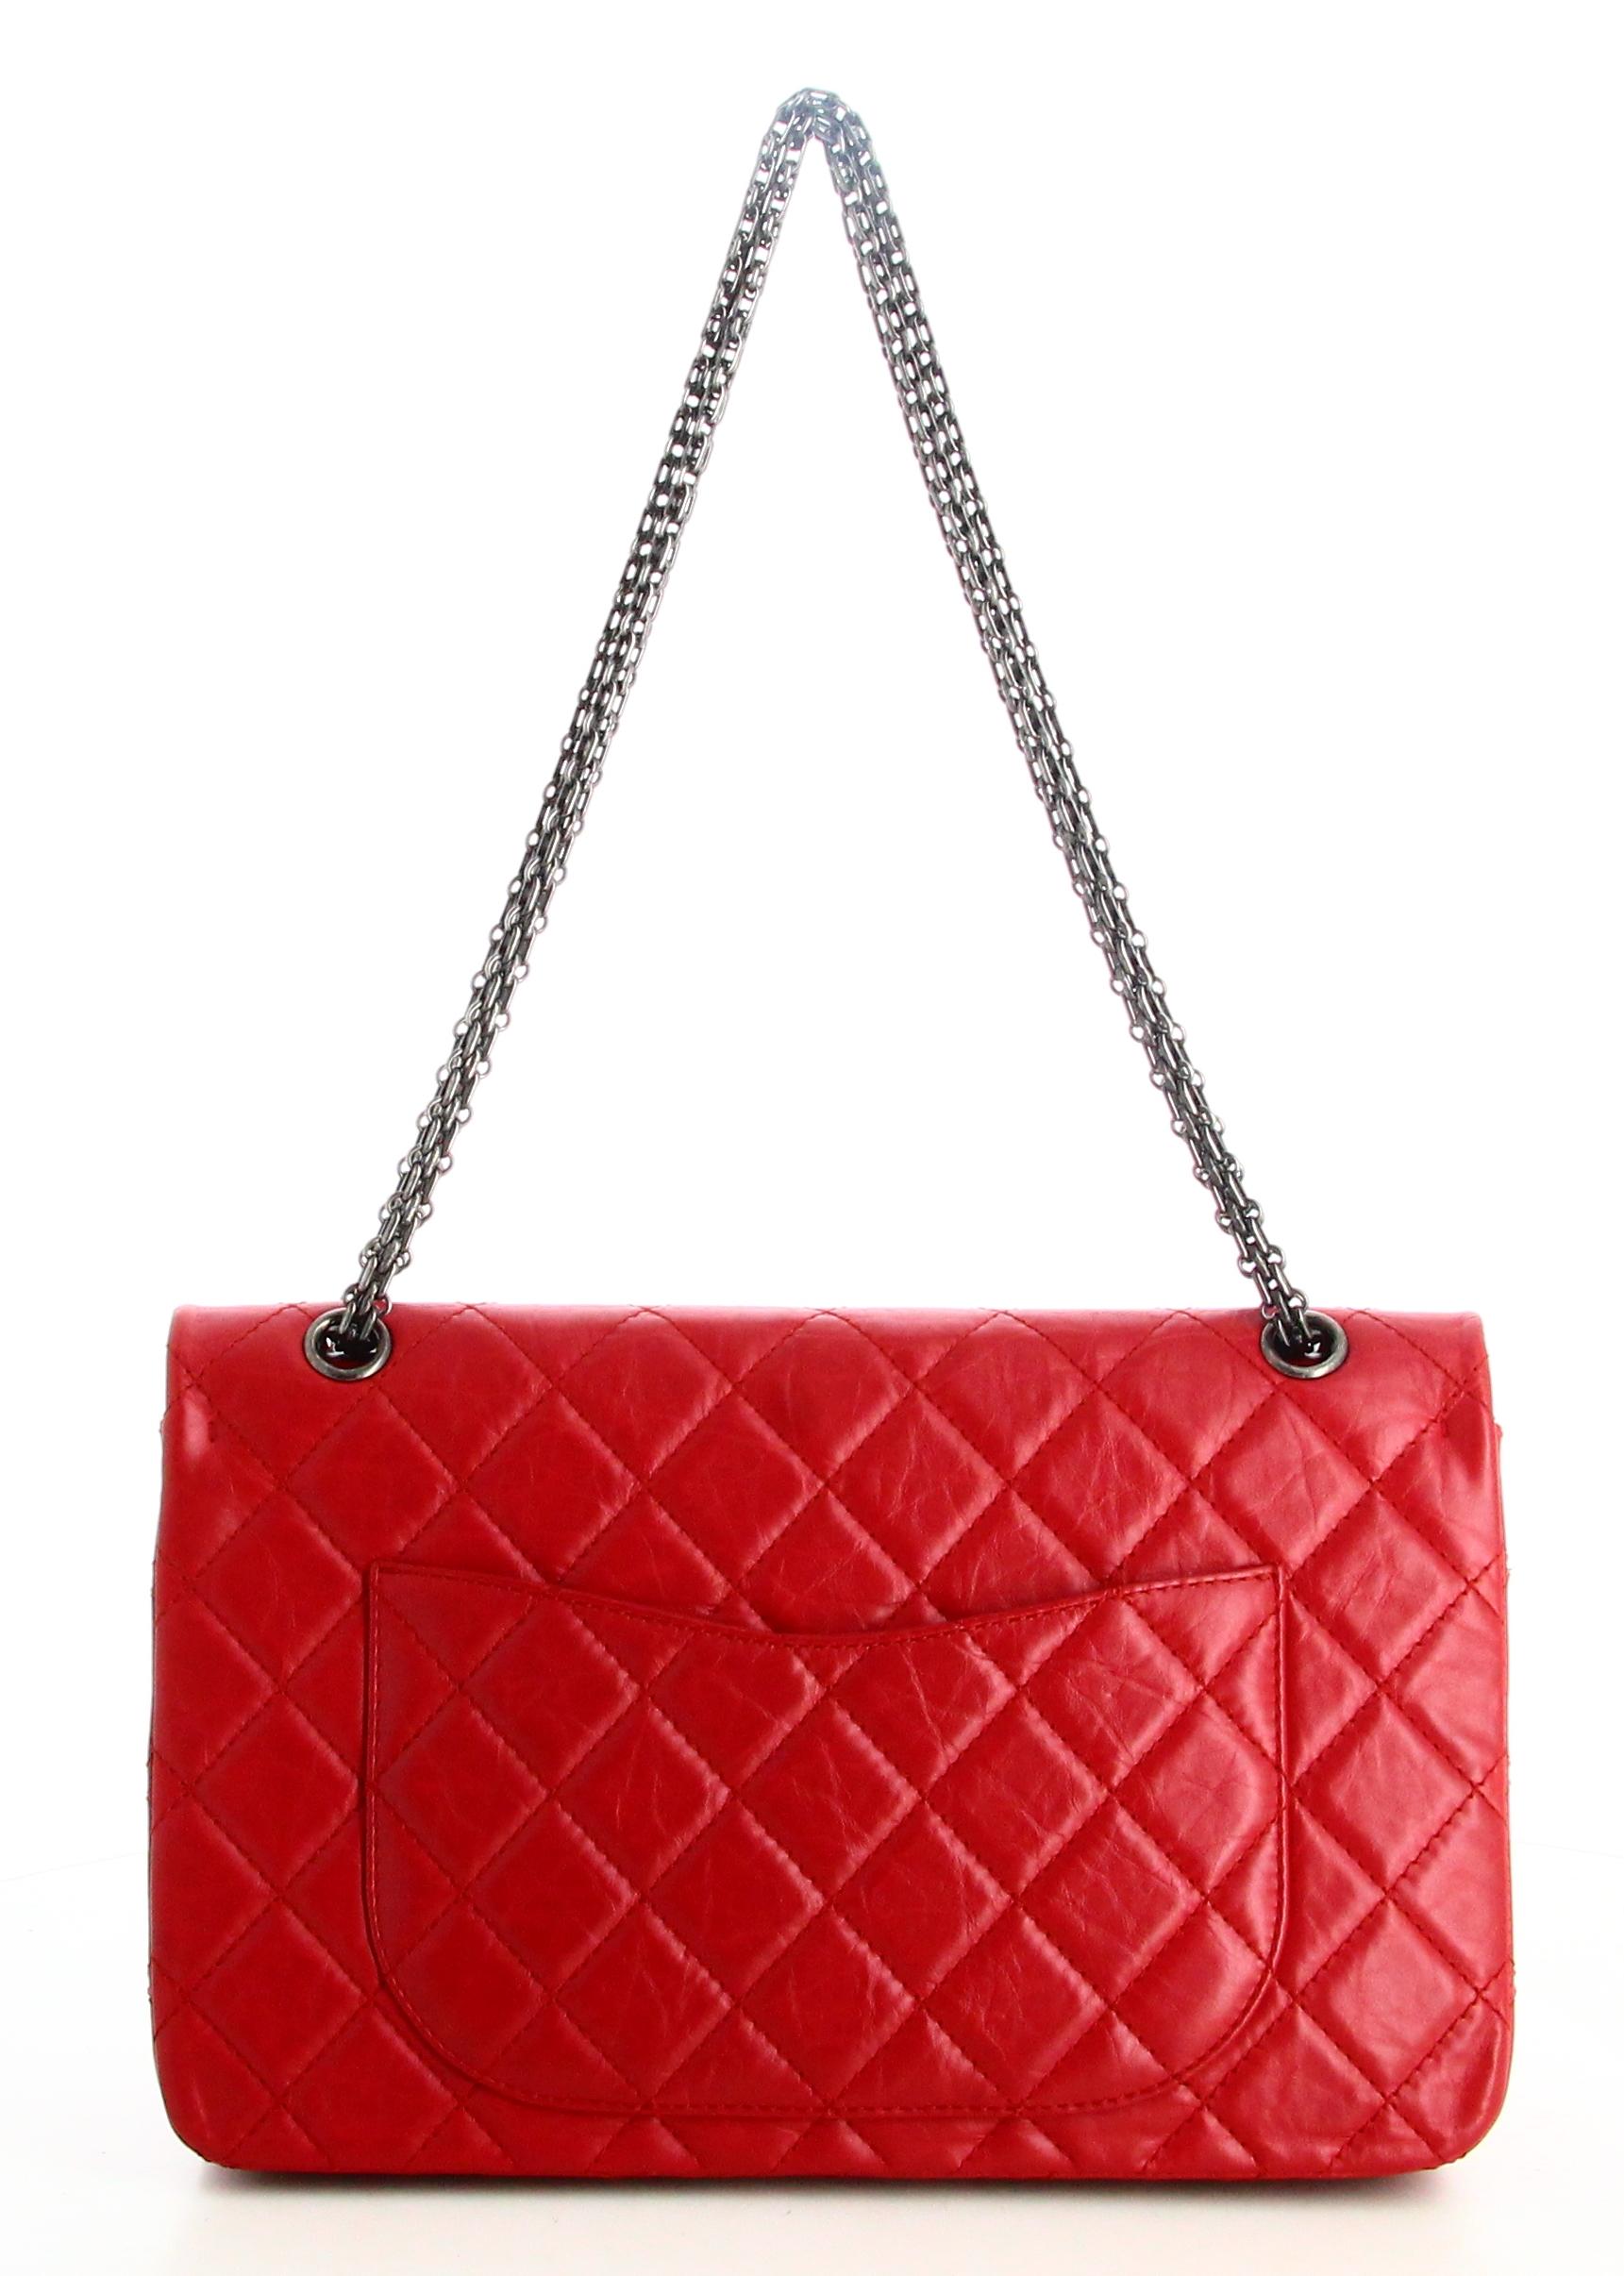 2011 Chanel Reissue Handbag 2.55 Calfskin Double Flap For Sale 2